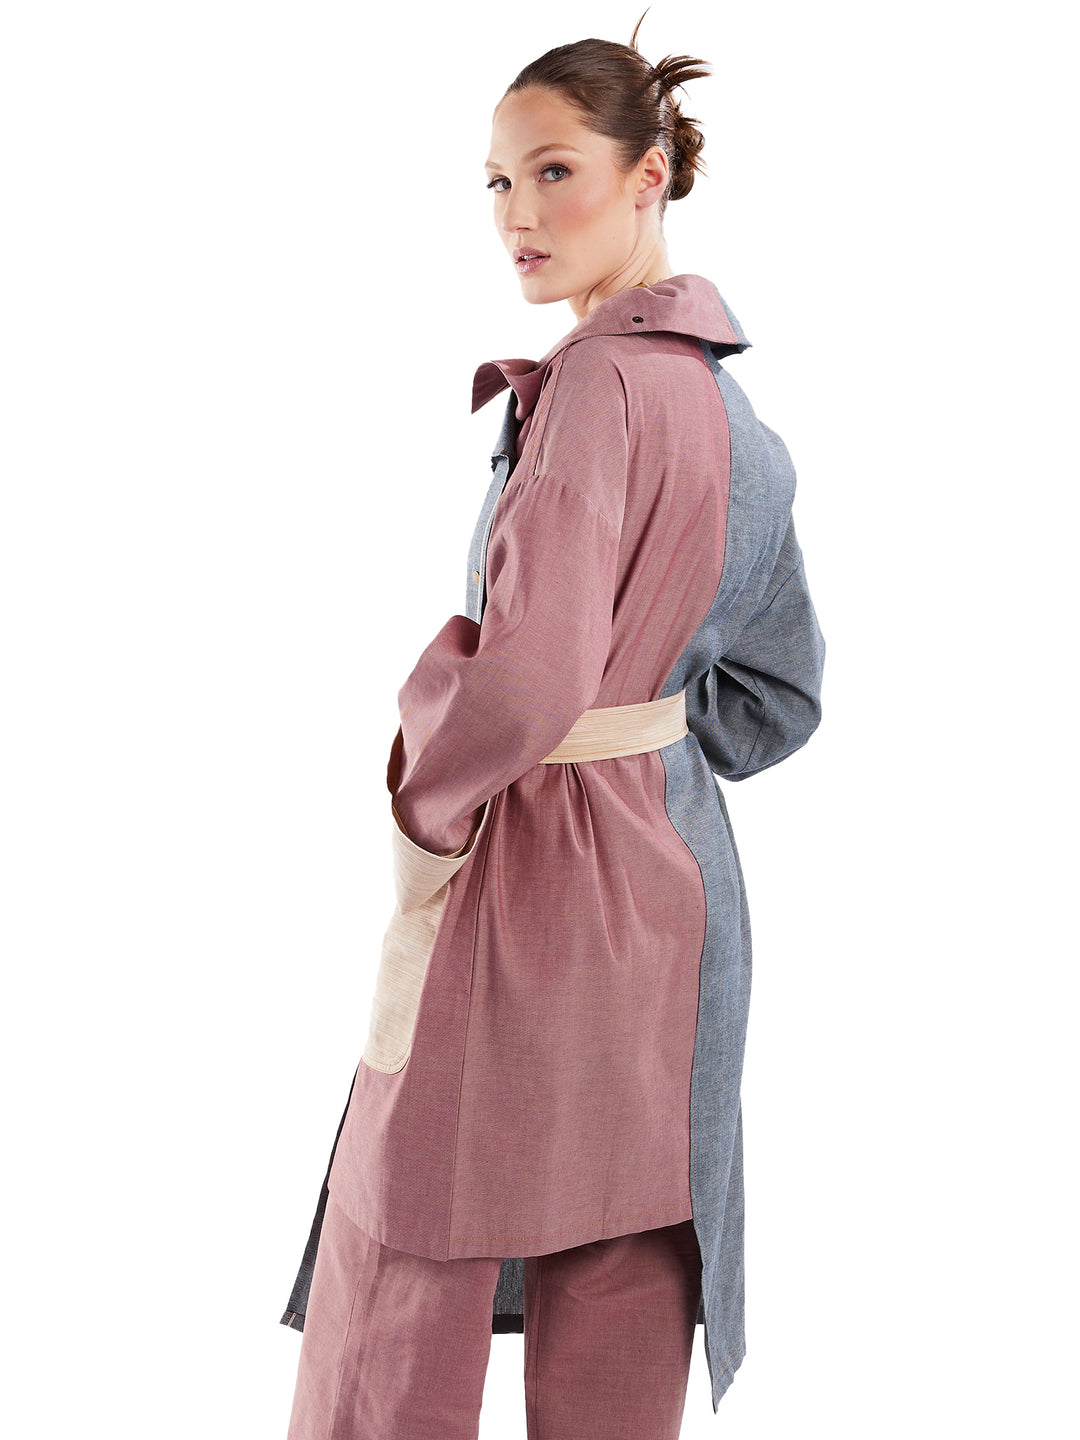 Women’s asymmetrical trench coat neutral color